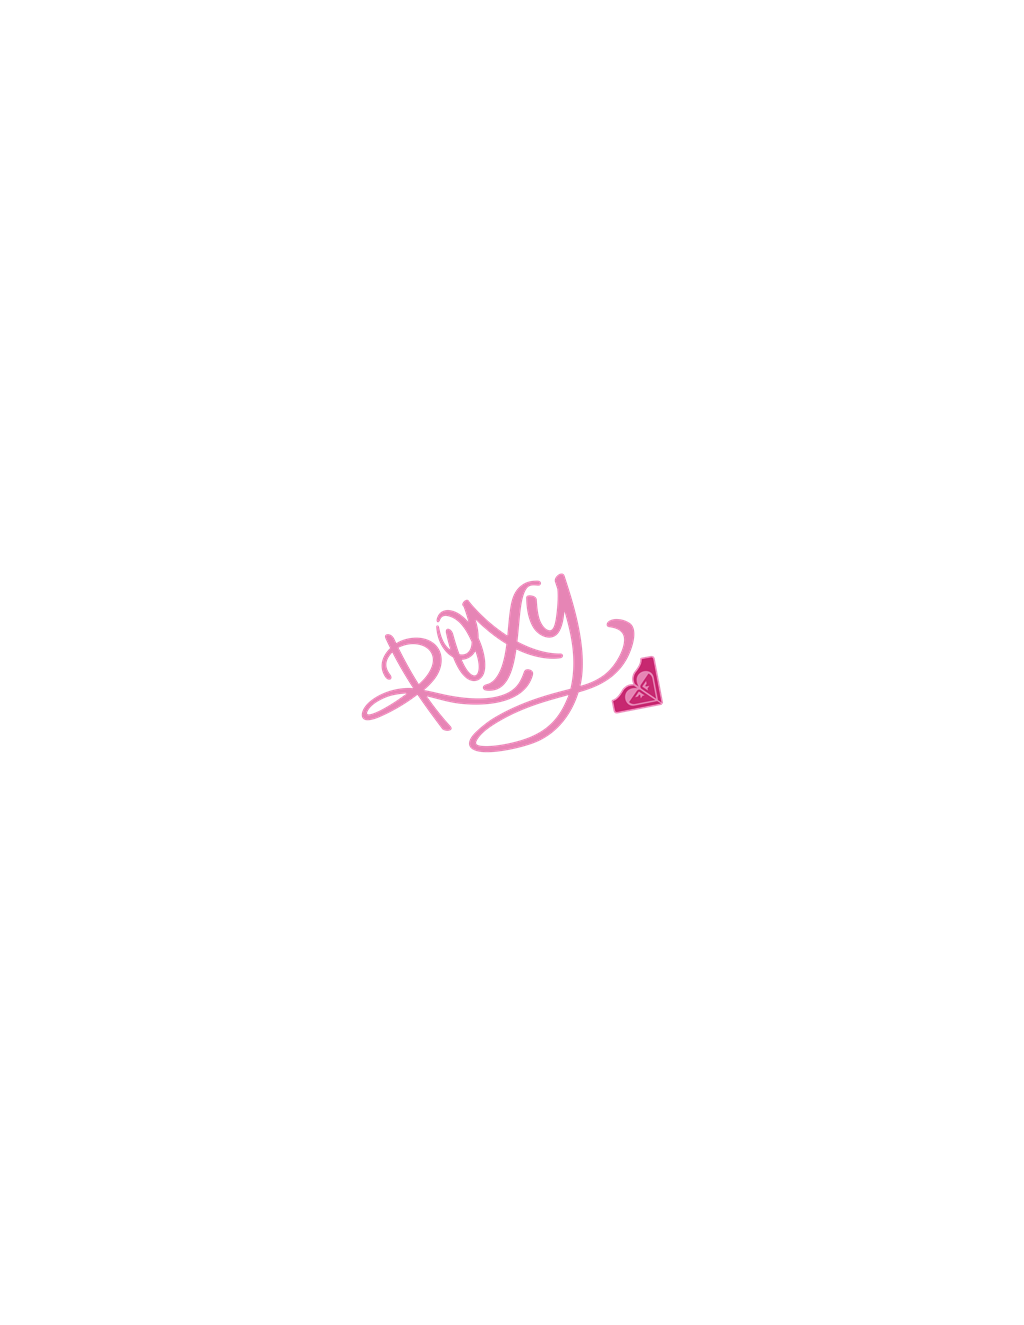 ROXY logotype, transparent .png, medium, large